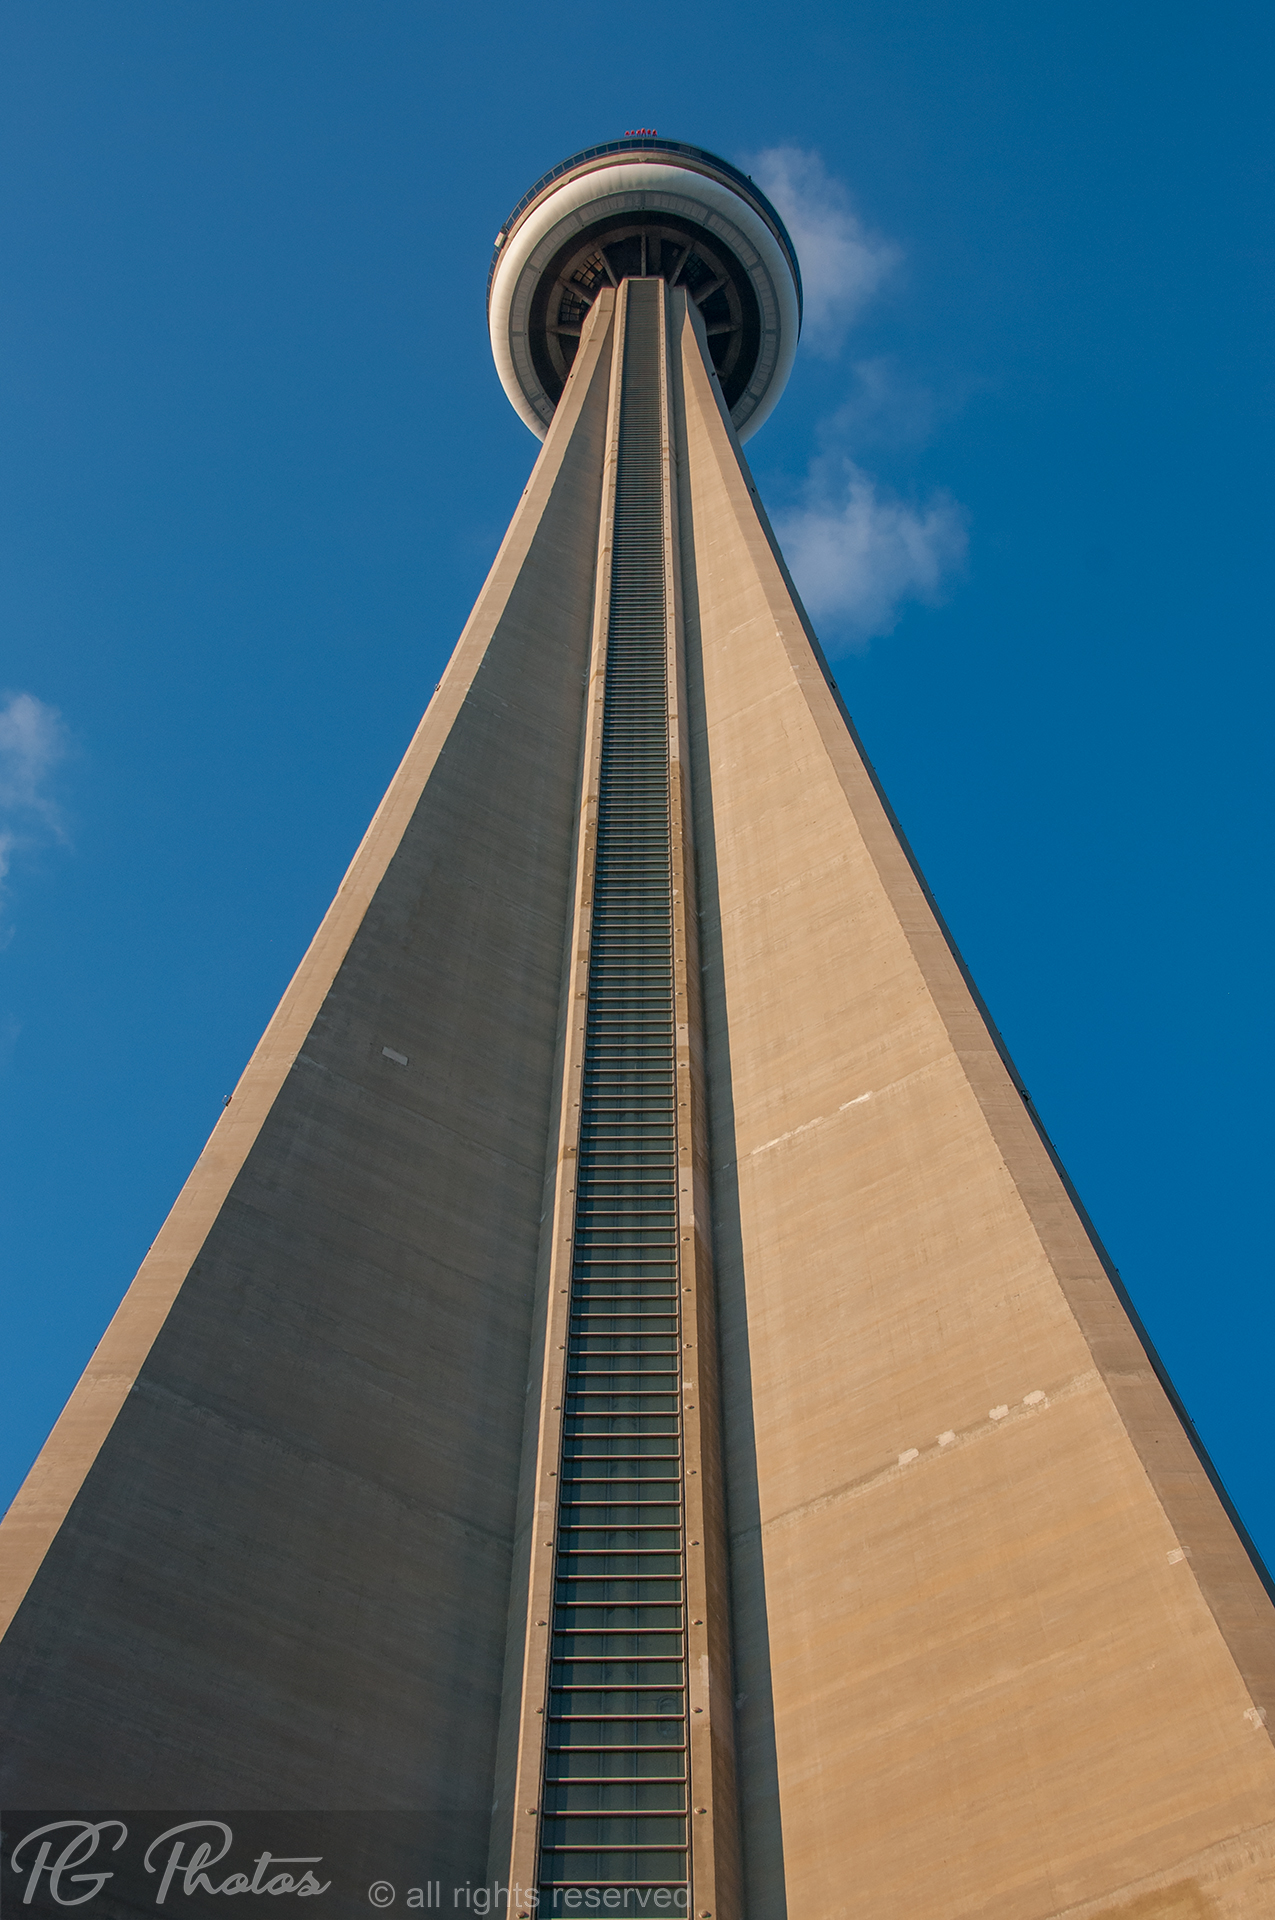 Toronto’s CN Tower